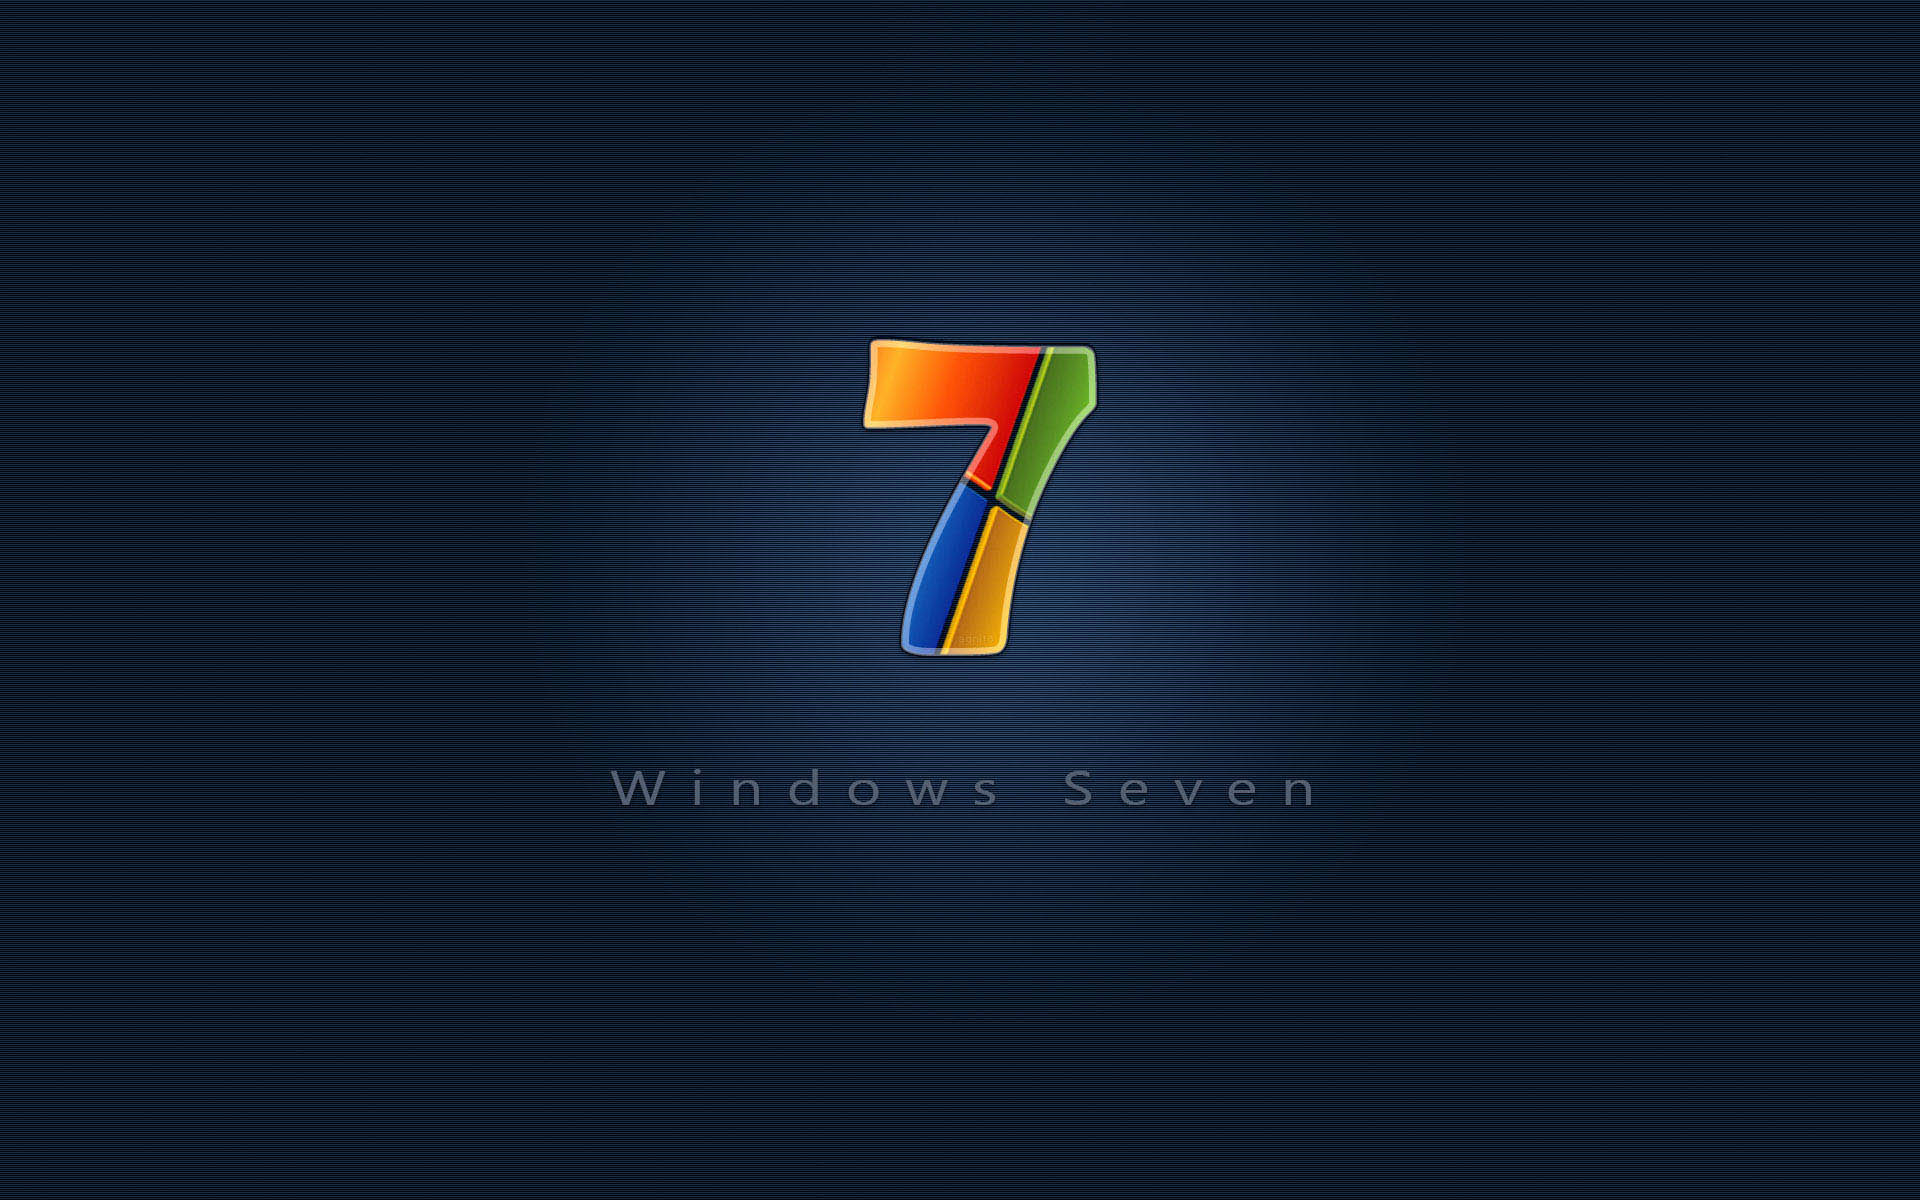 windows 7 ultimate wallpaper hd 3d for desktop